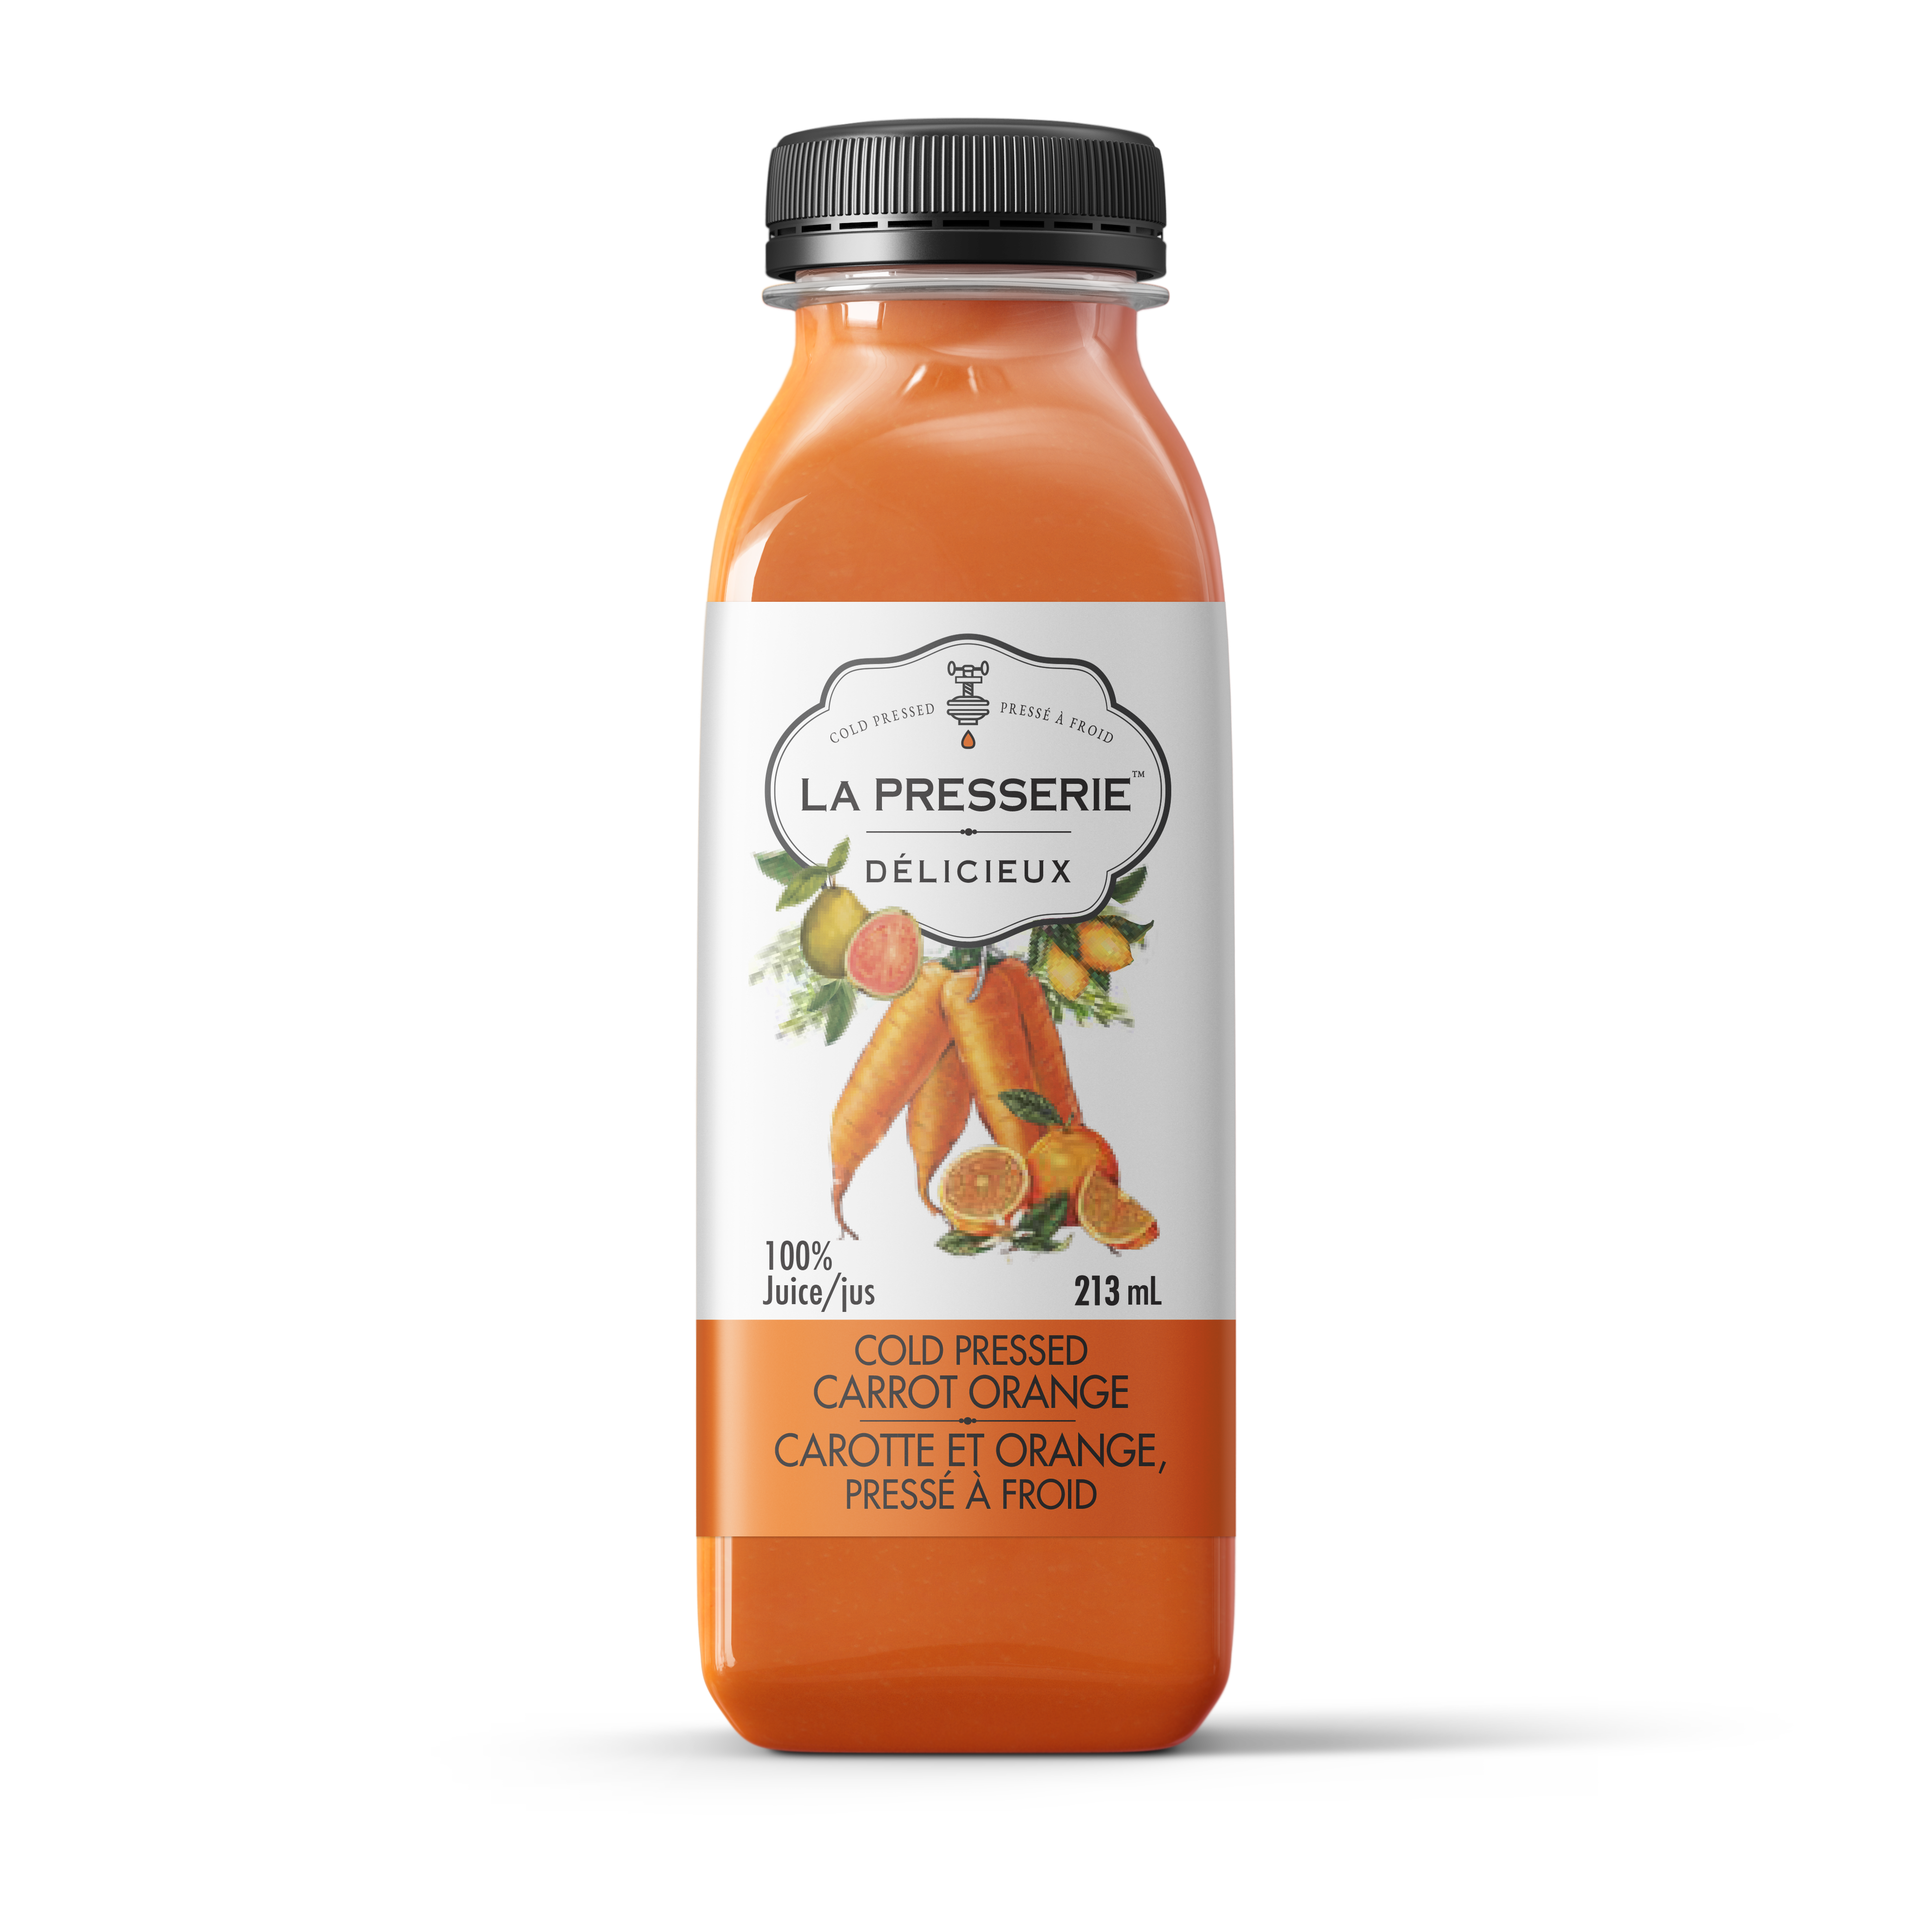 A bottle of carrot orange cold pressed juice.